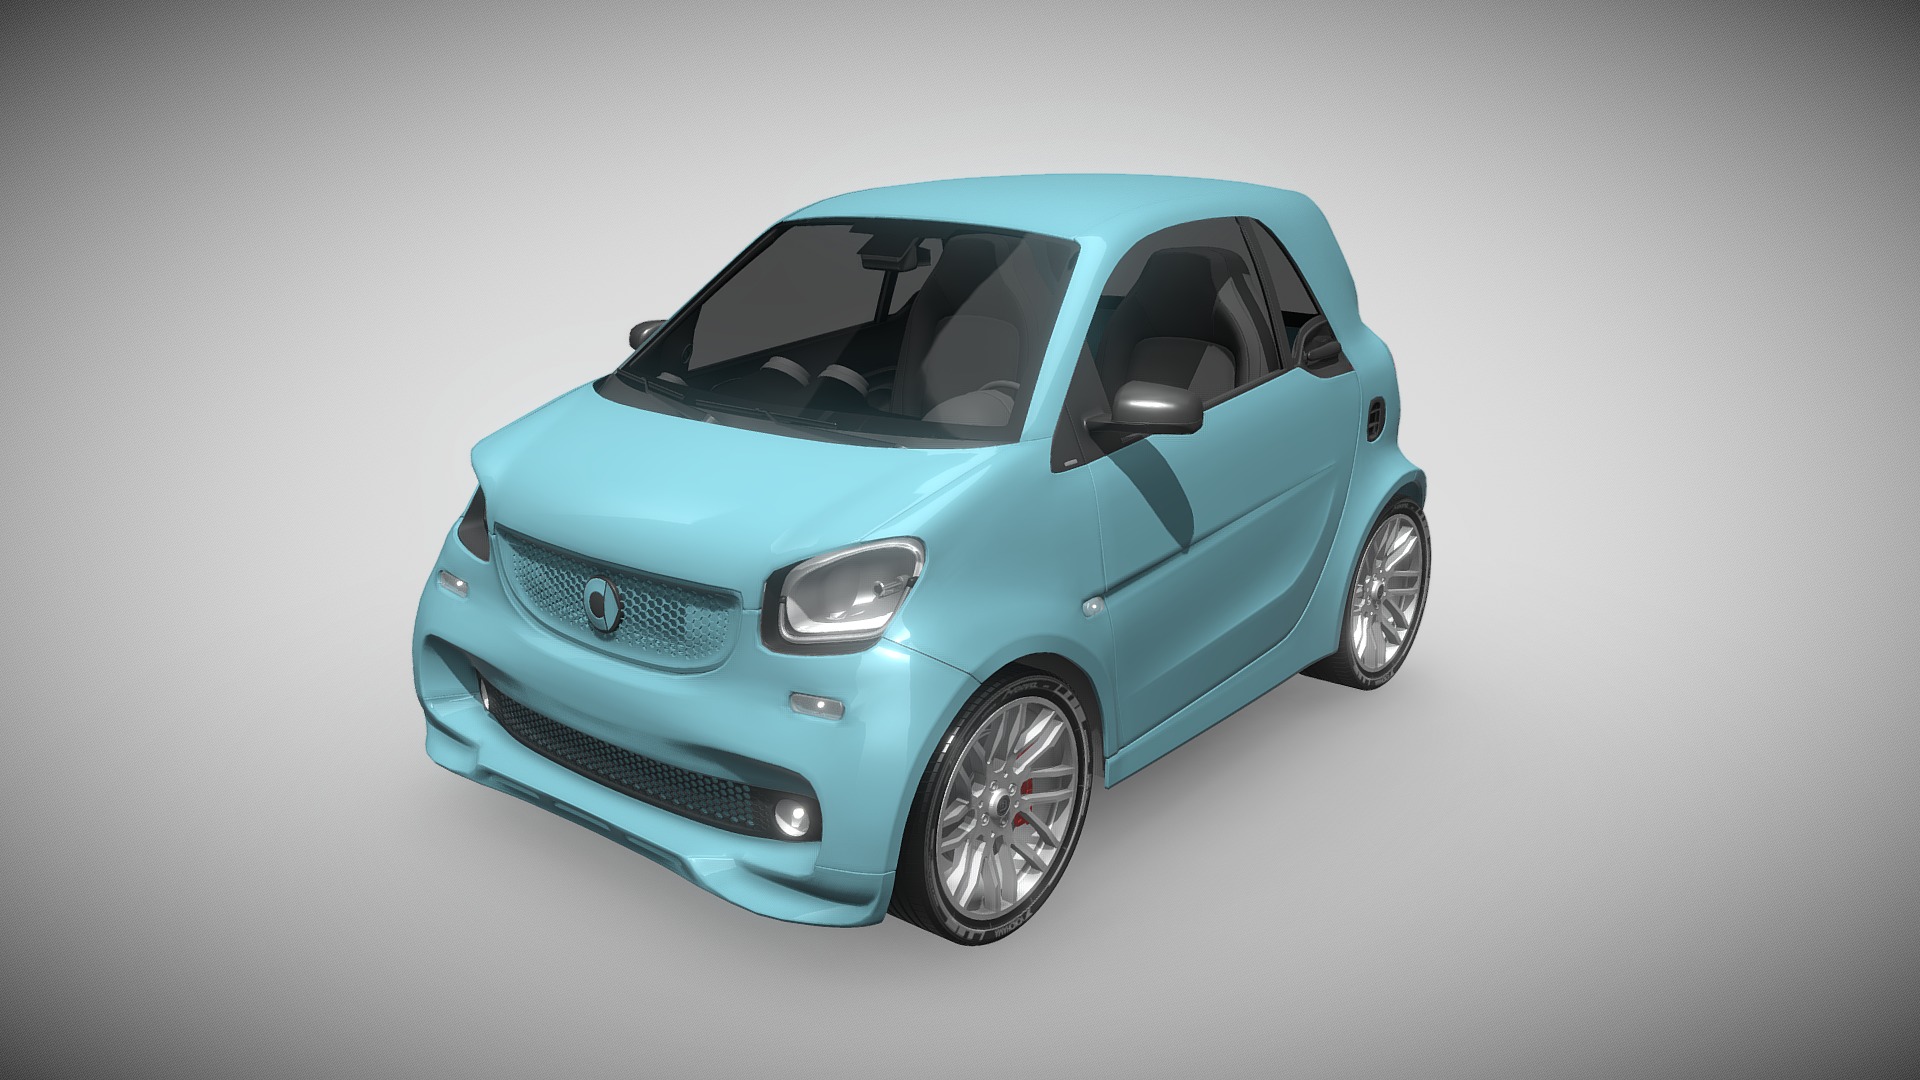 3D model Smart Model - This is a 3D model of the Smart Model. The 3D model is about a blue car with its doors open.